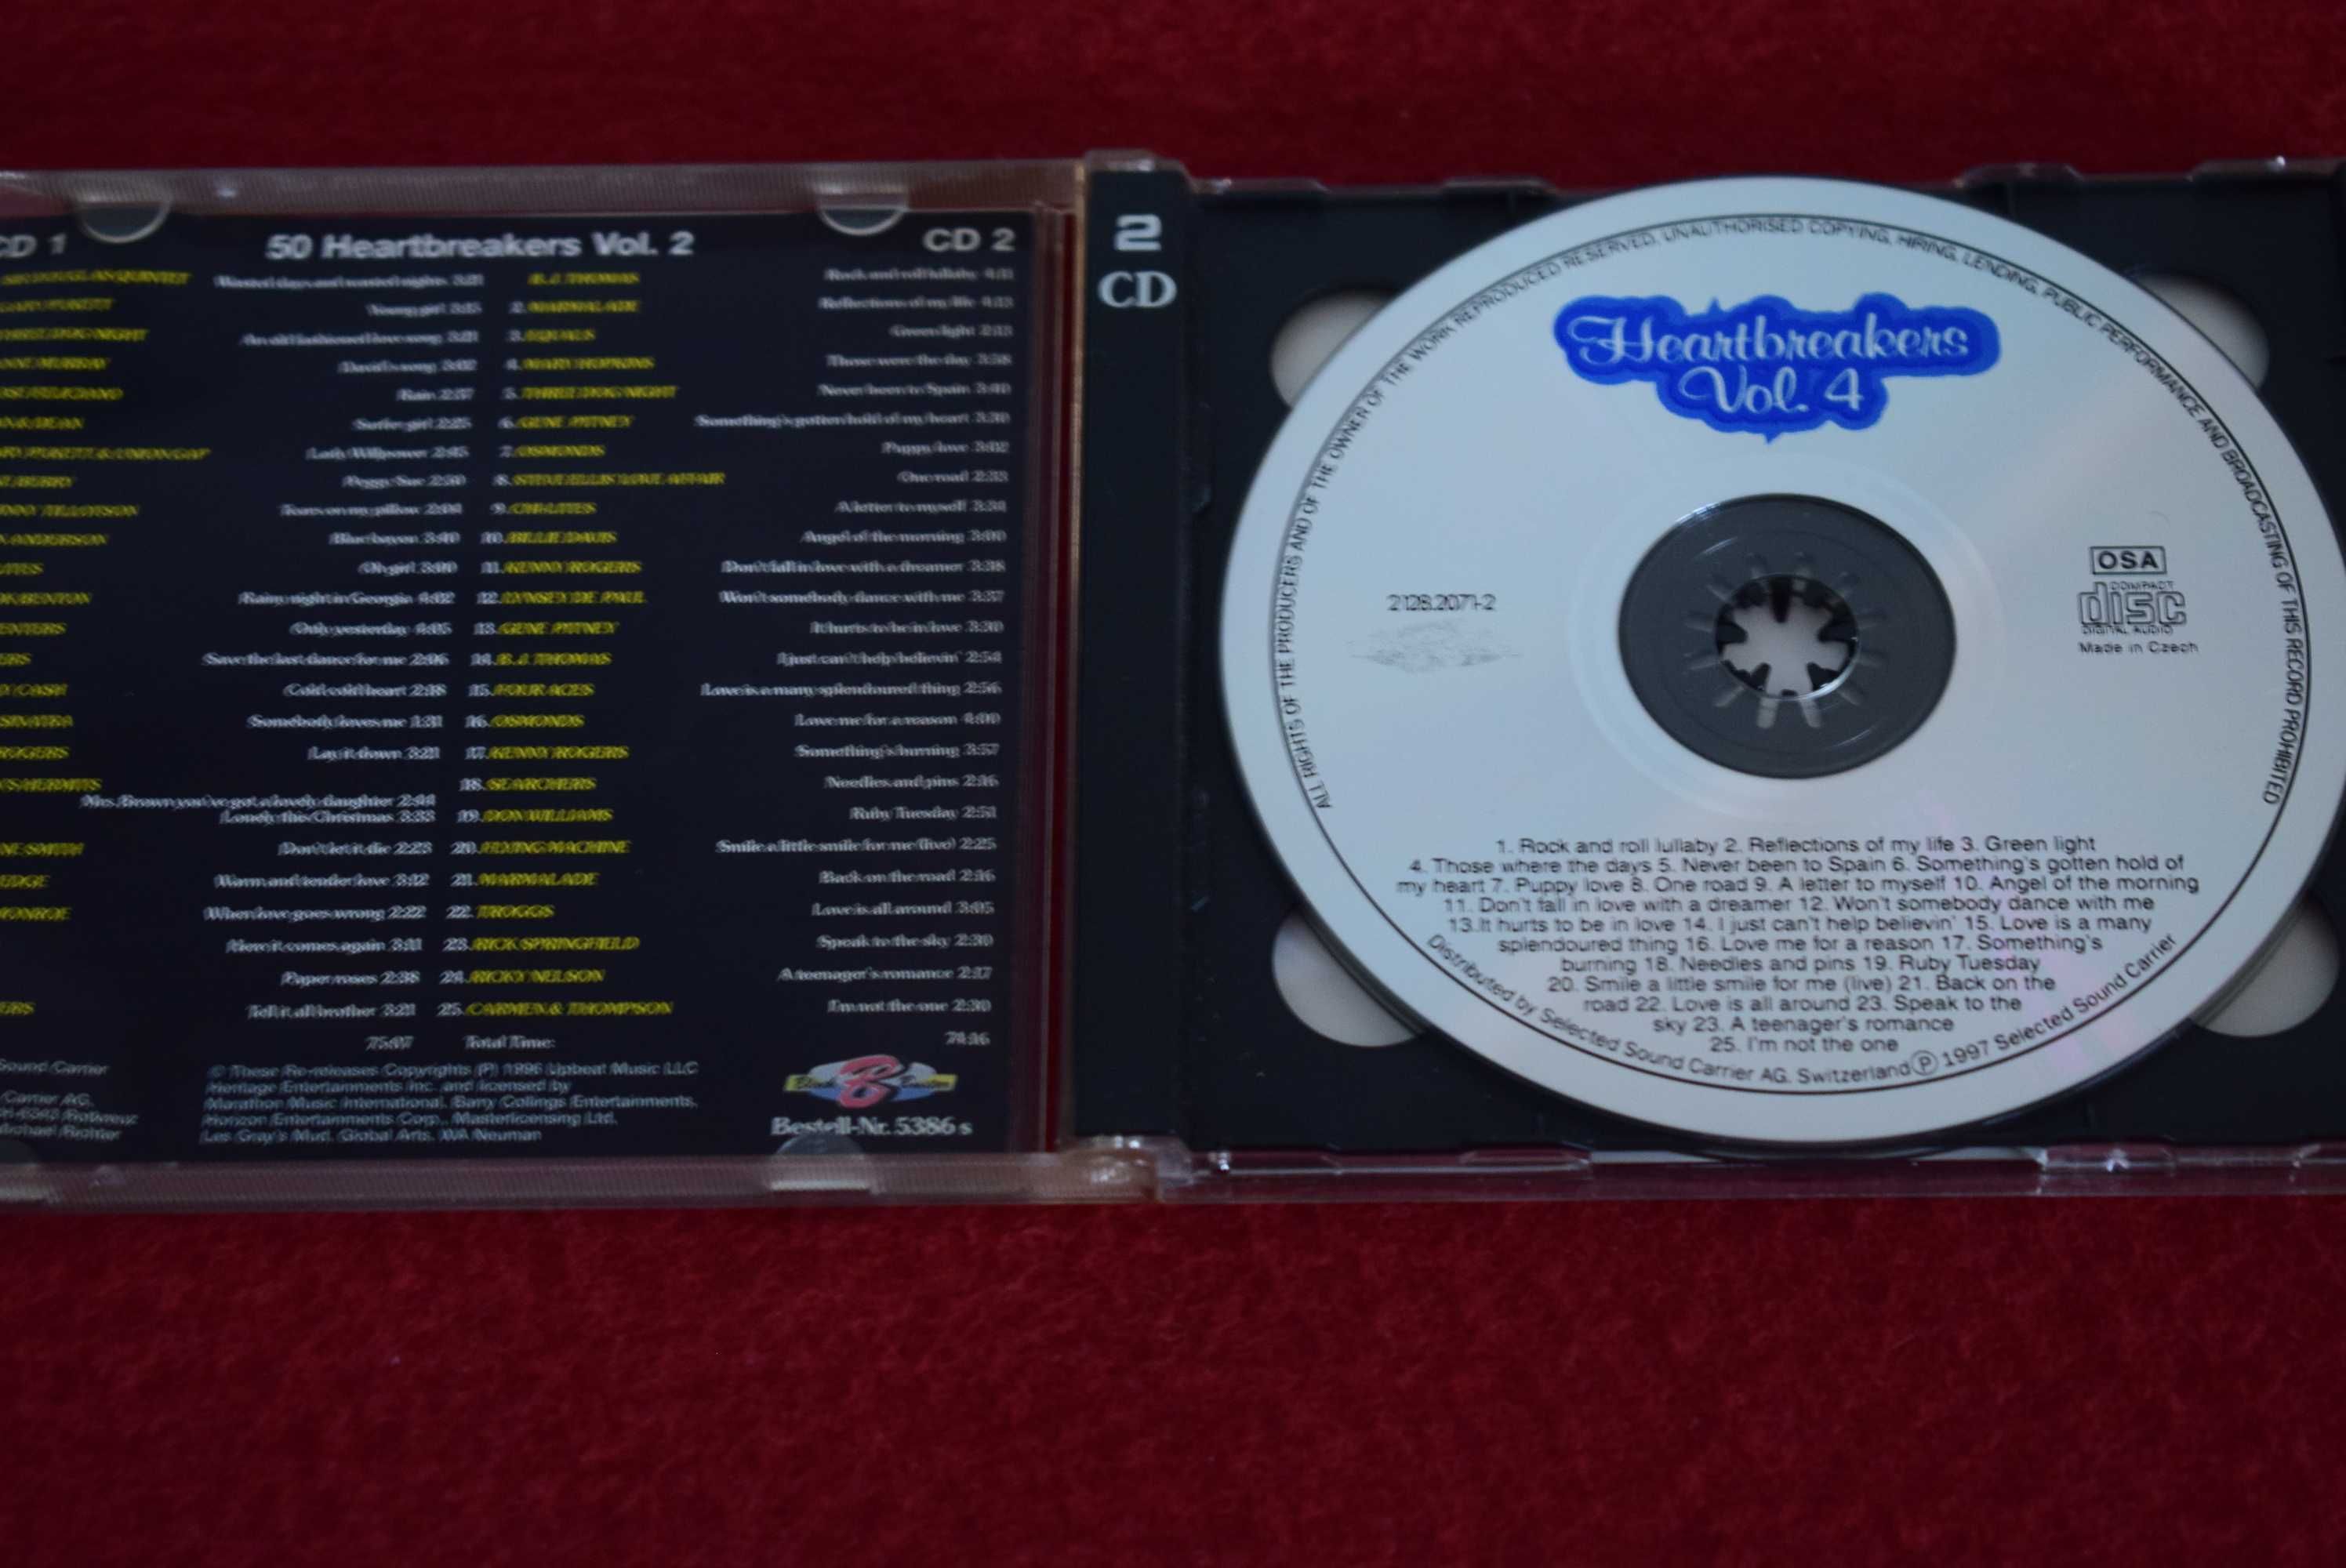 50 Heartbreakers Vol. 2 na dwóch płytach CD - 1999